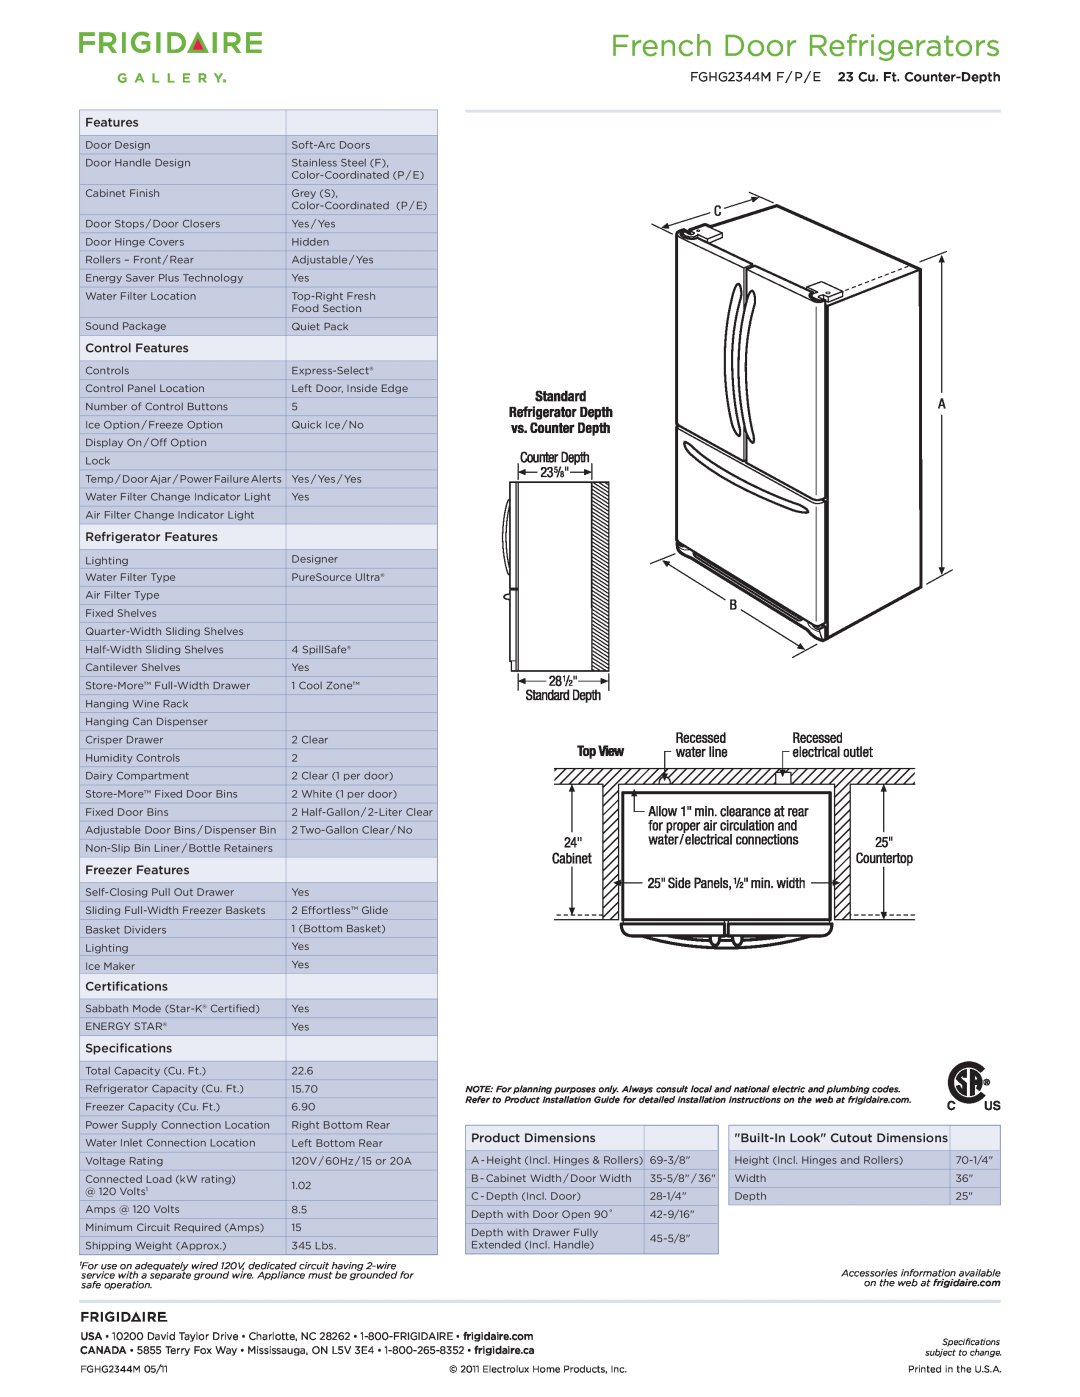 Frigidaire dimensions French Door Refrigerators, FGHG2344M F / P / E 23 Cu. Ft. Counter-Depth 